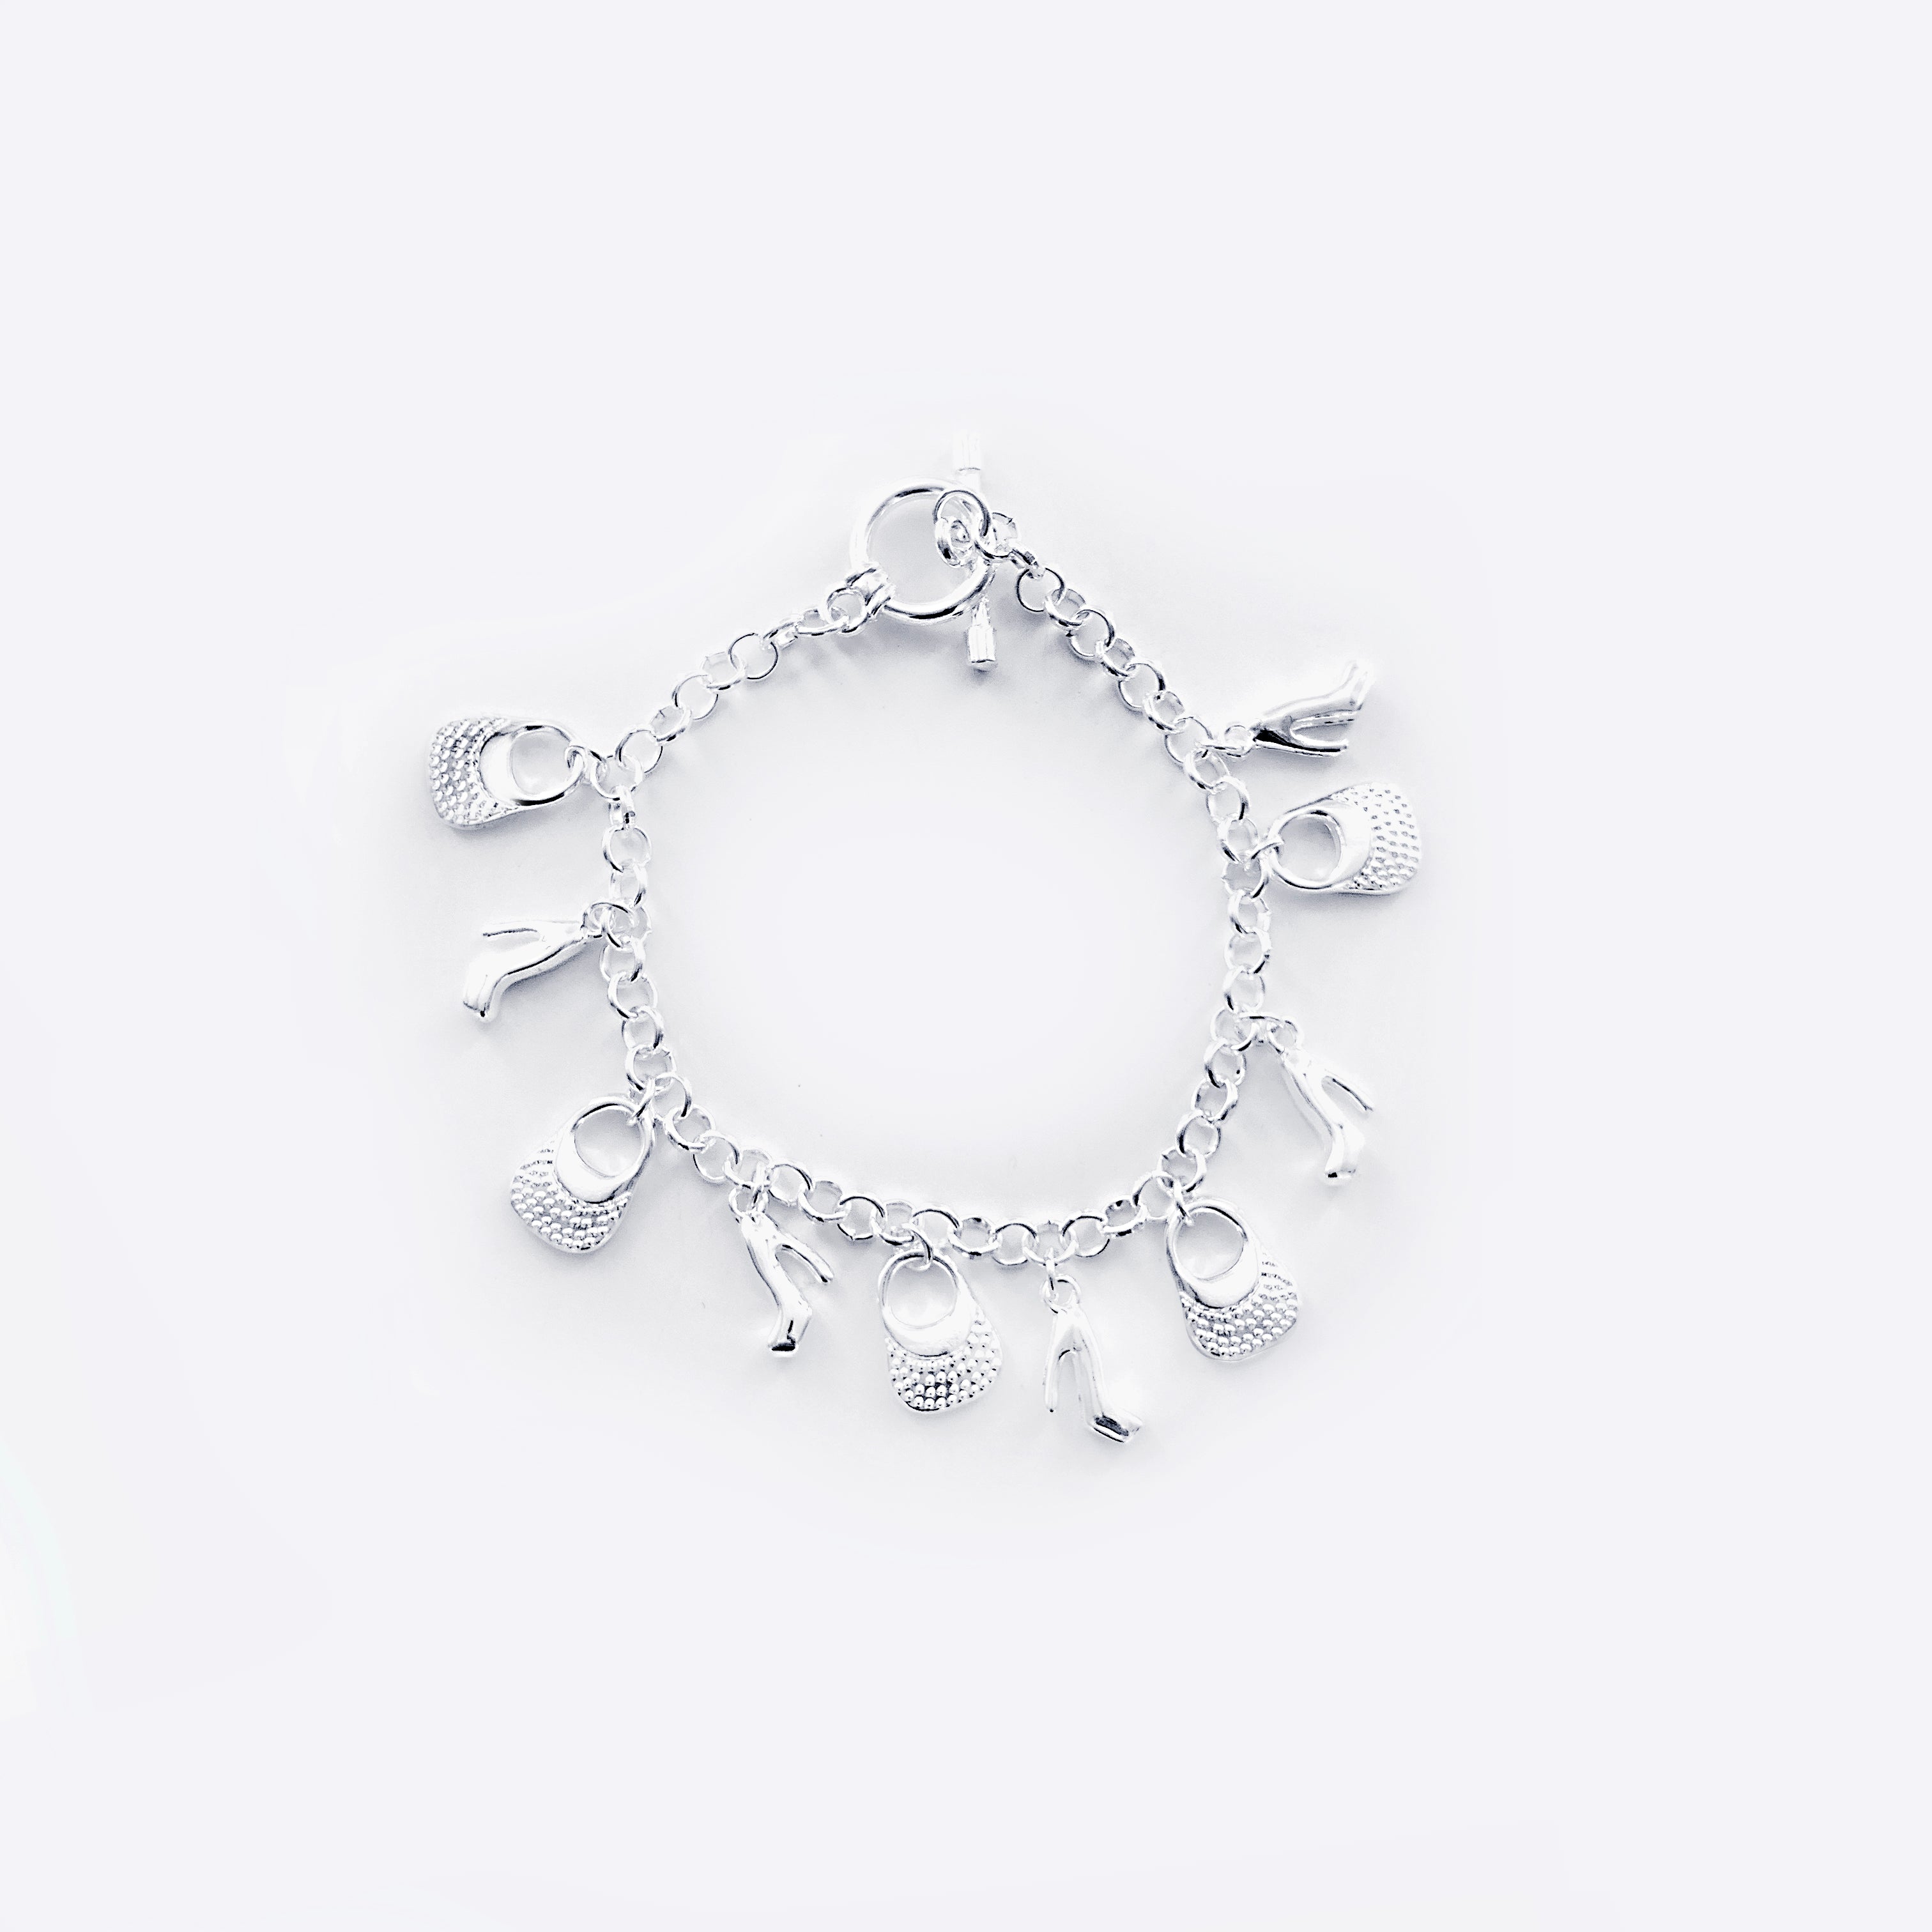 Charm Bracelet with Handbag and Shoe charms